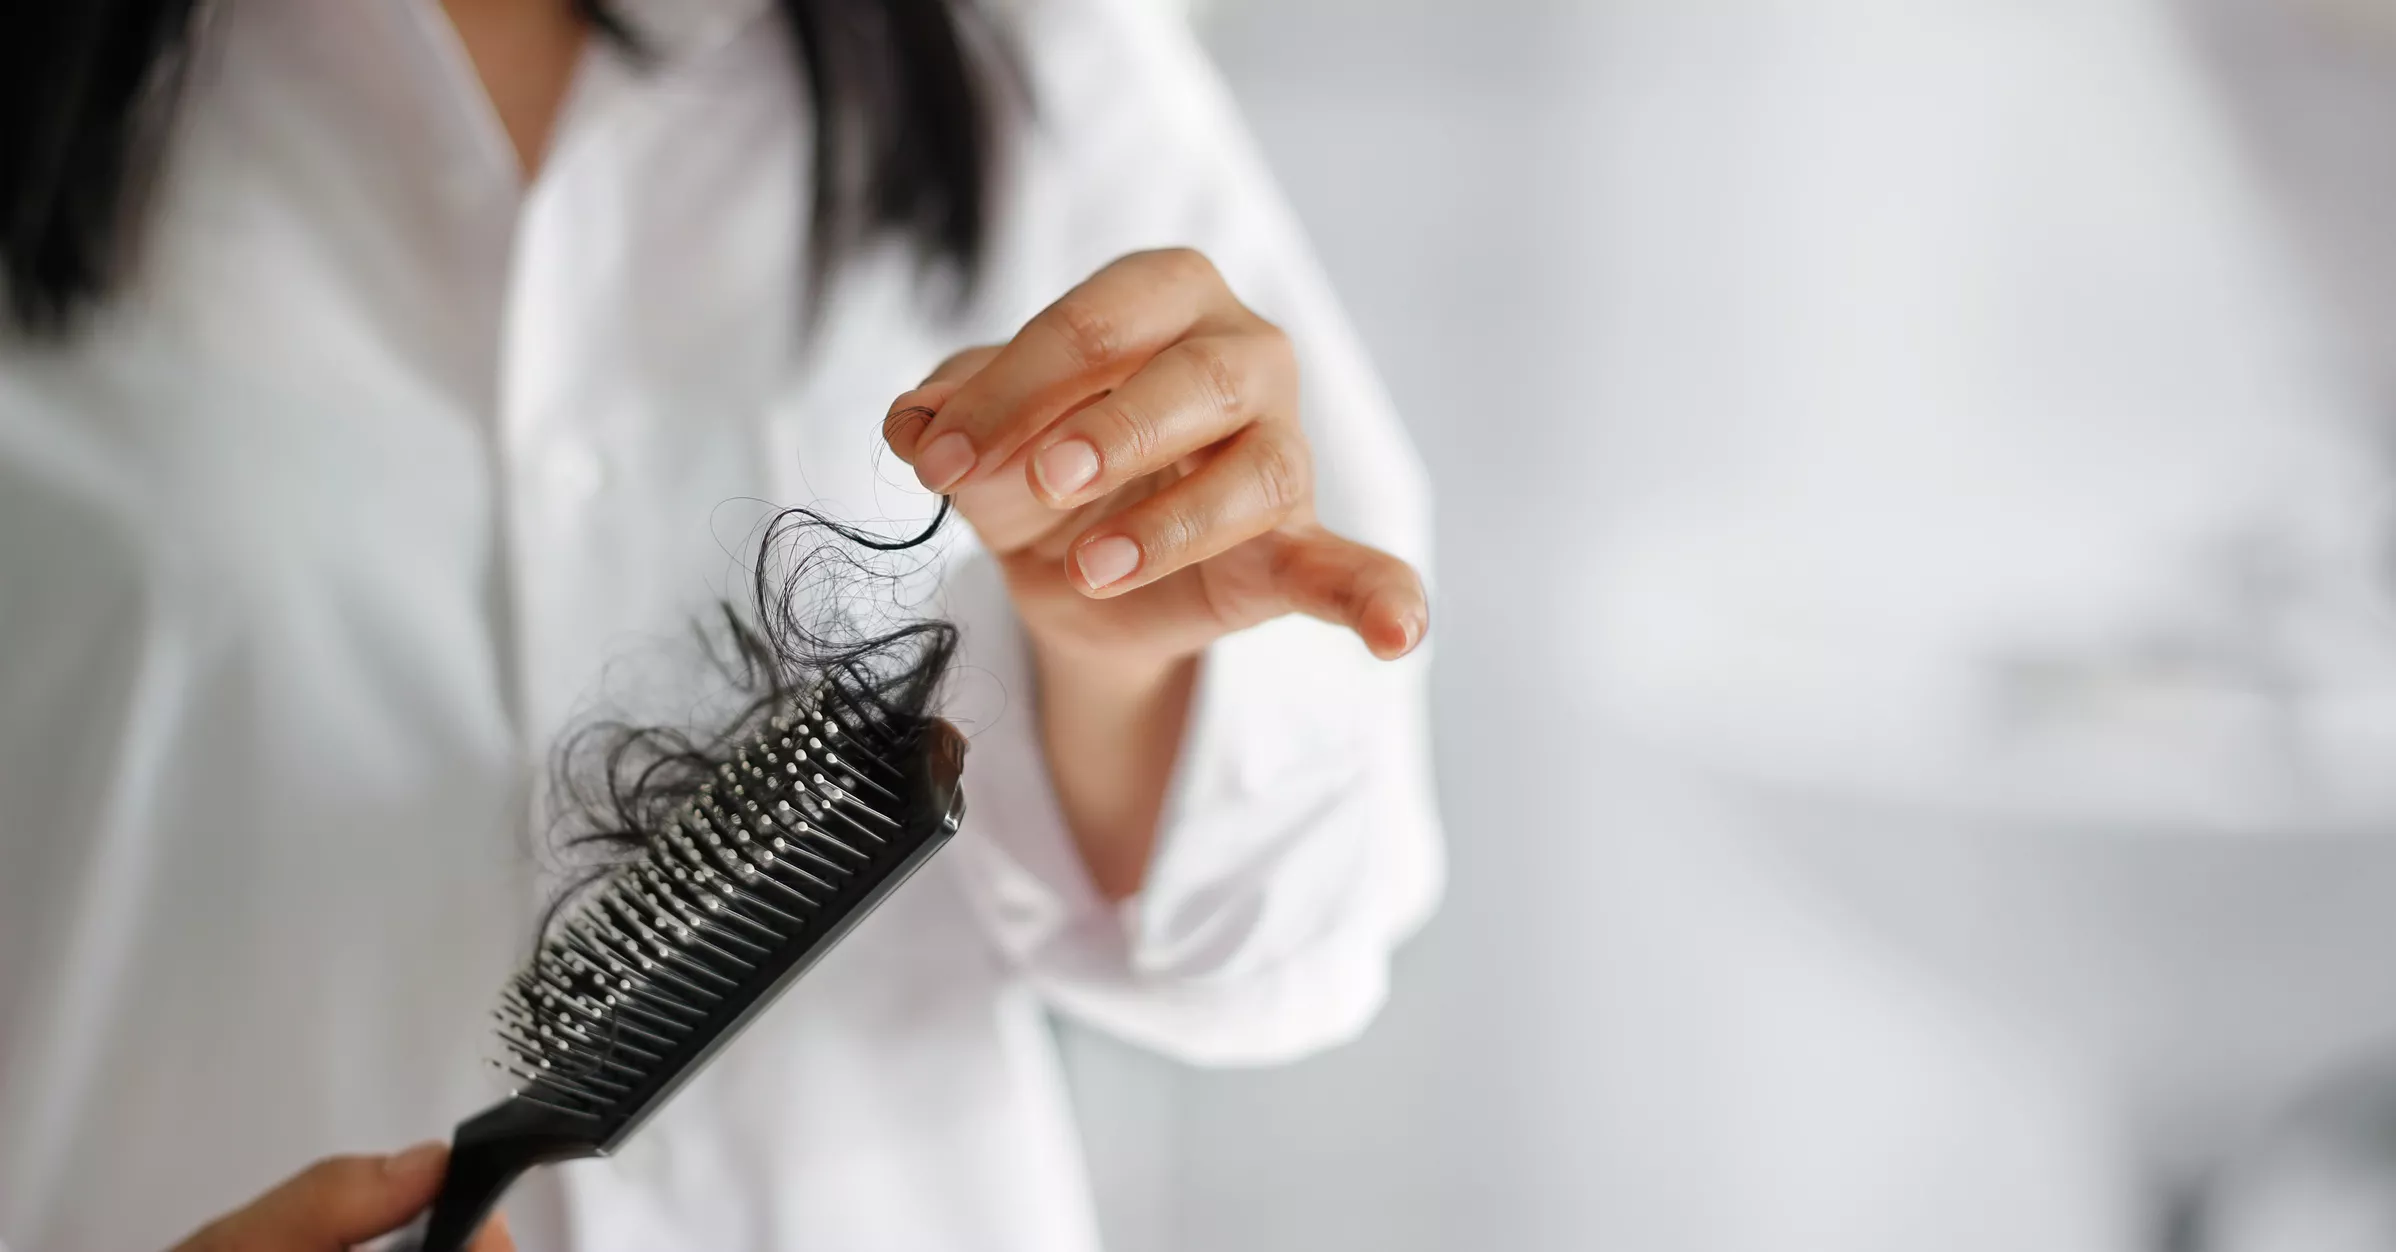 woman losing hair on hairbrush in hand 